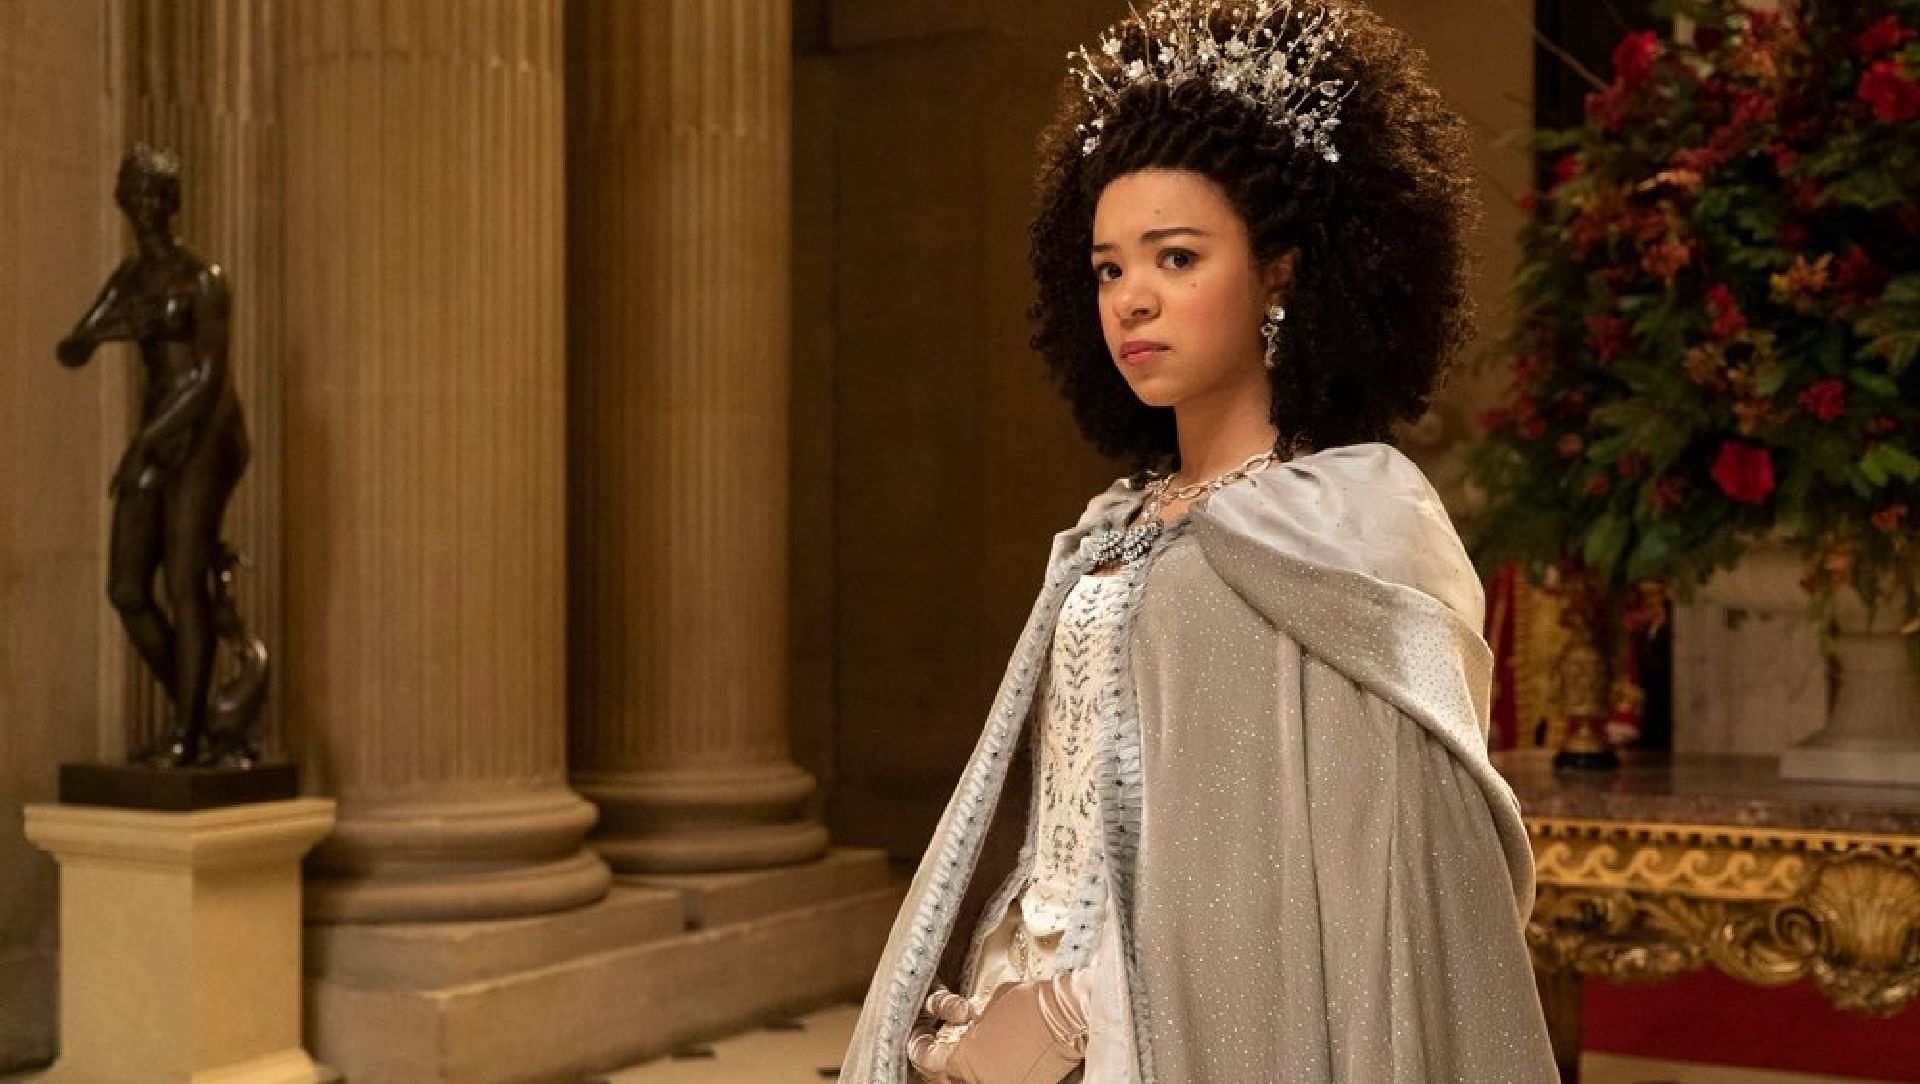 India Amarteifio como la joven Reina Charlotte
(Netflix)